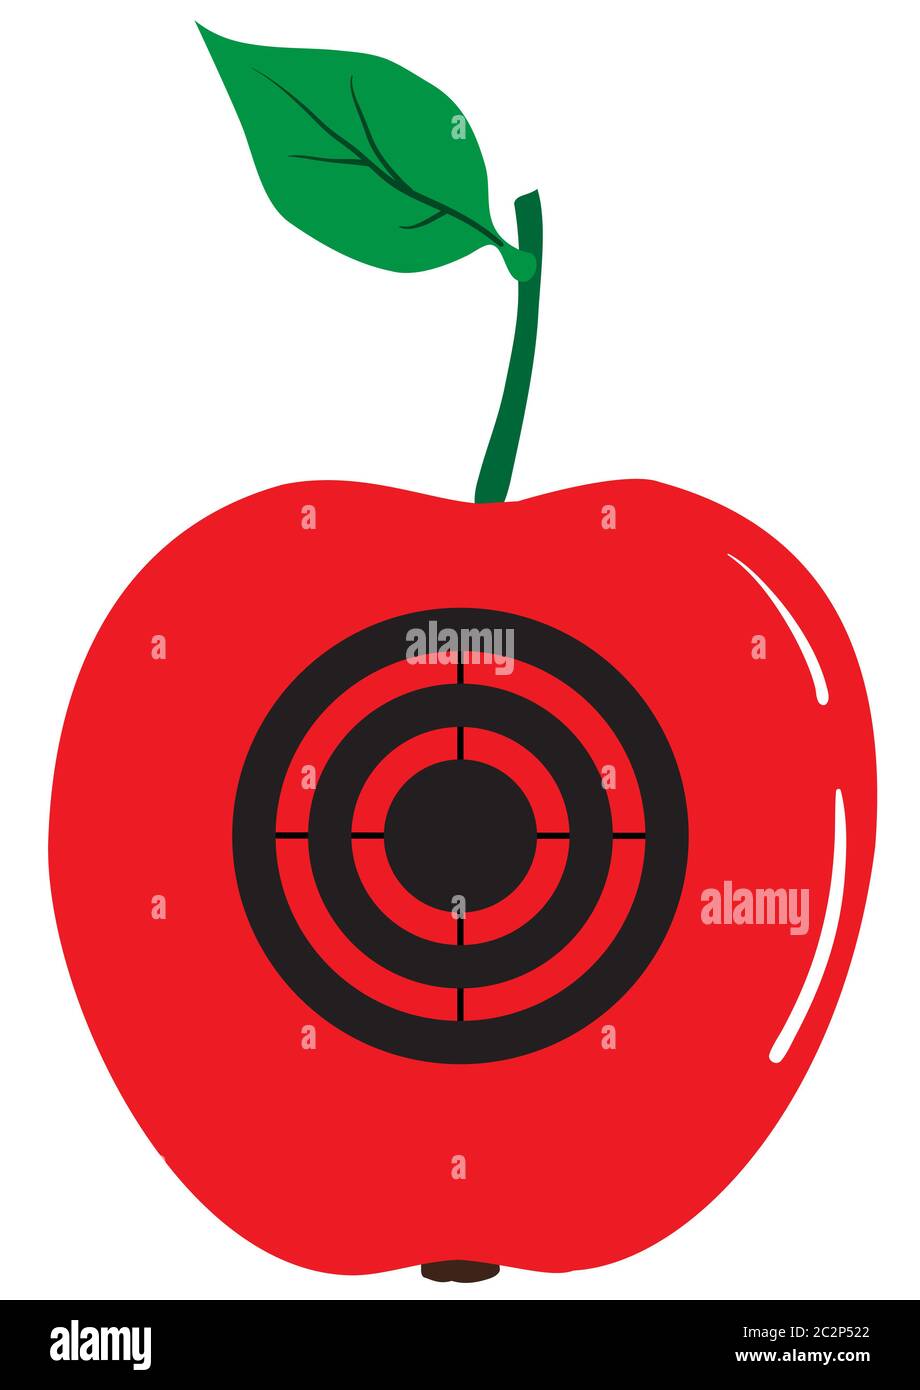 Apple : Target